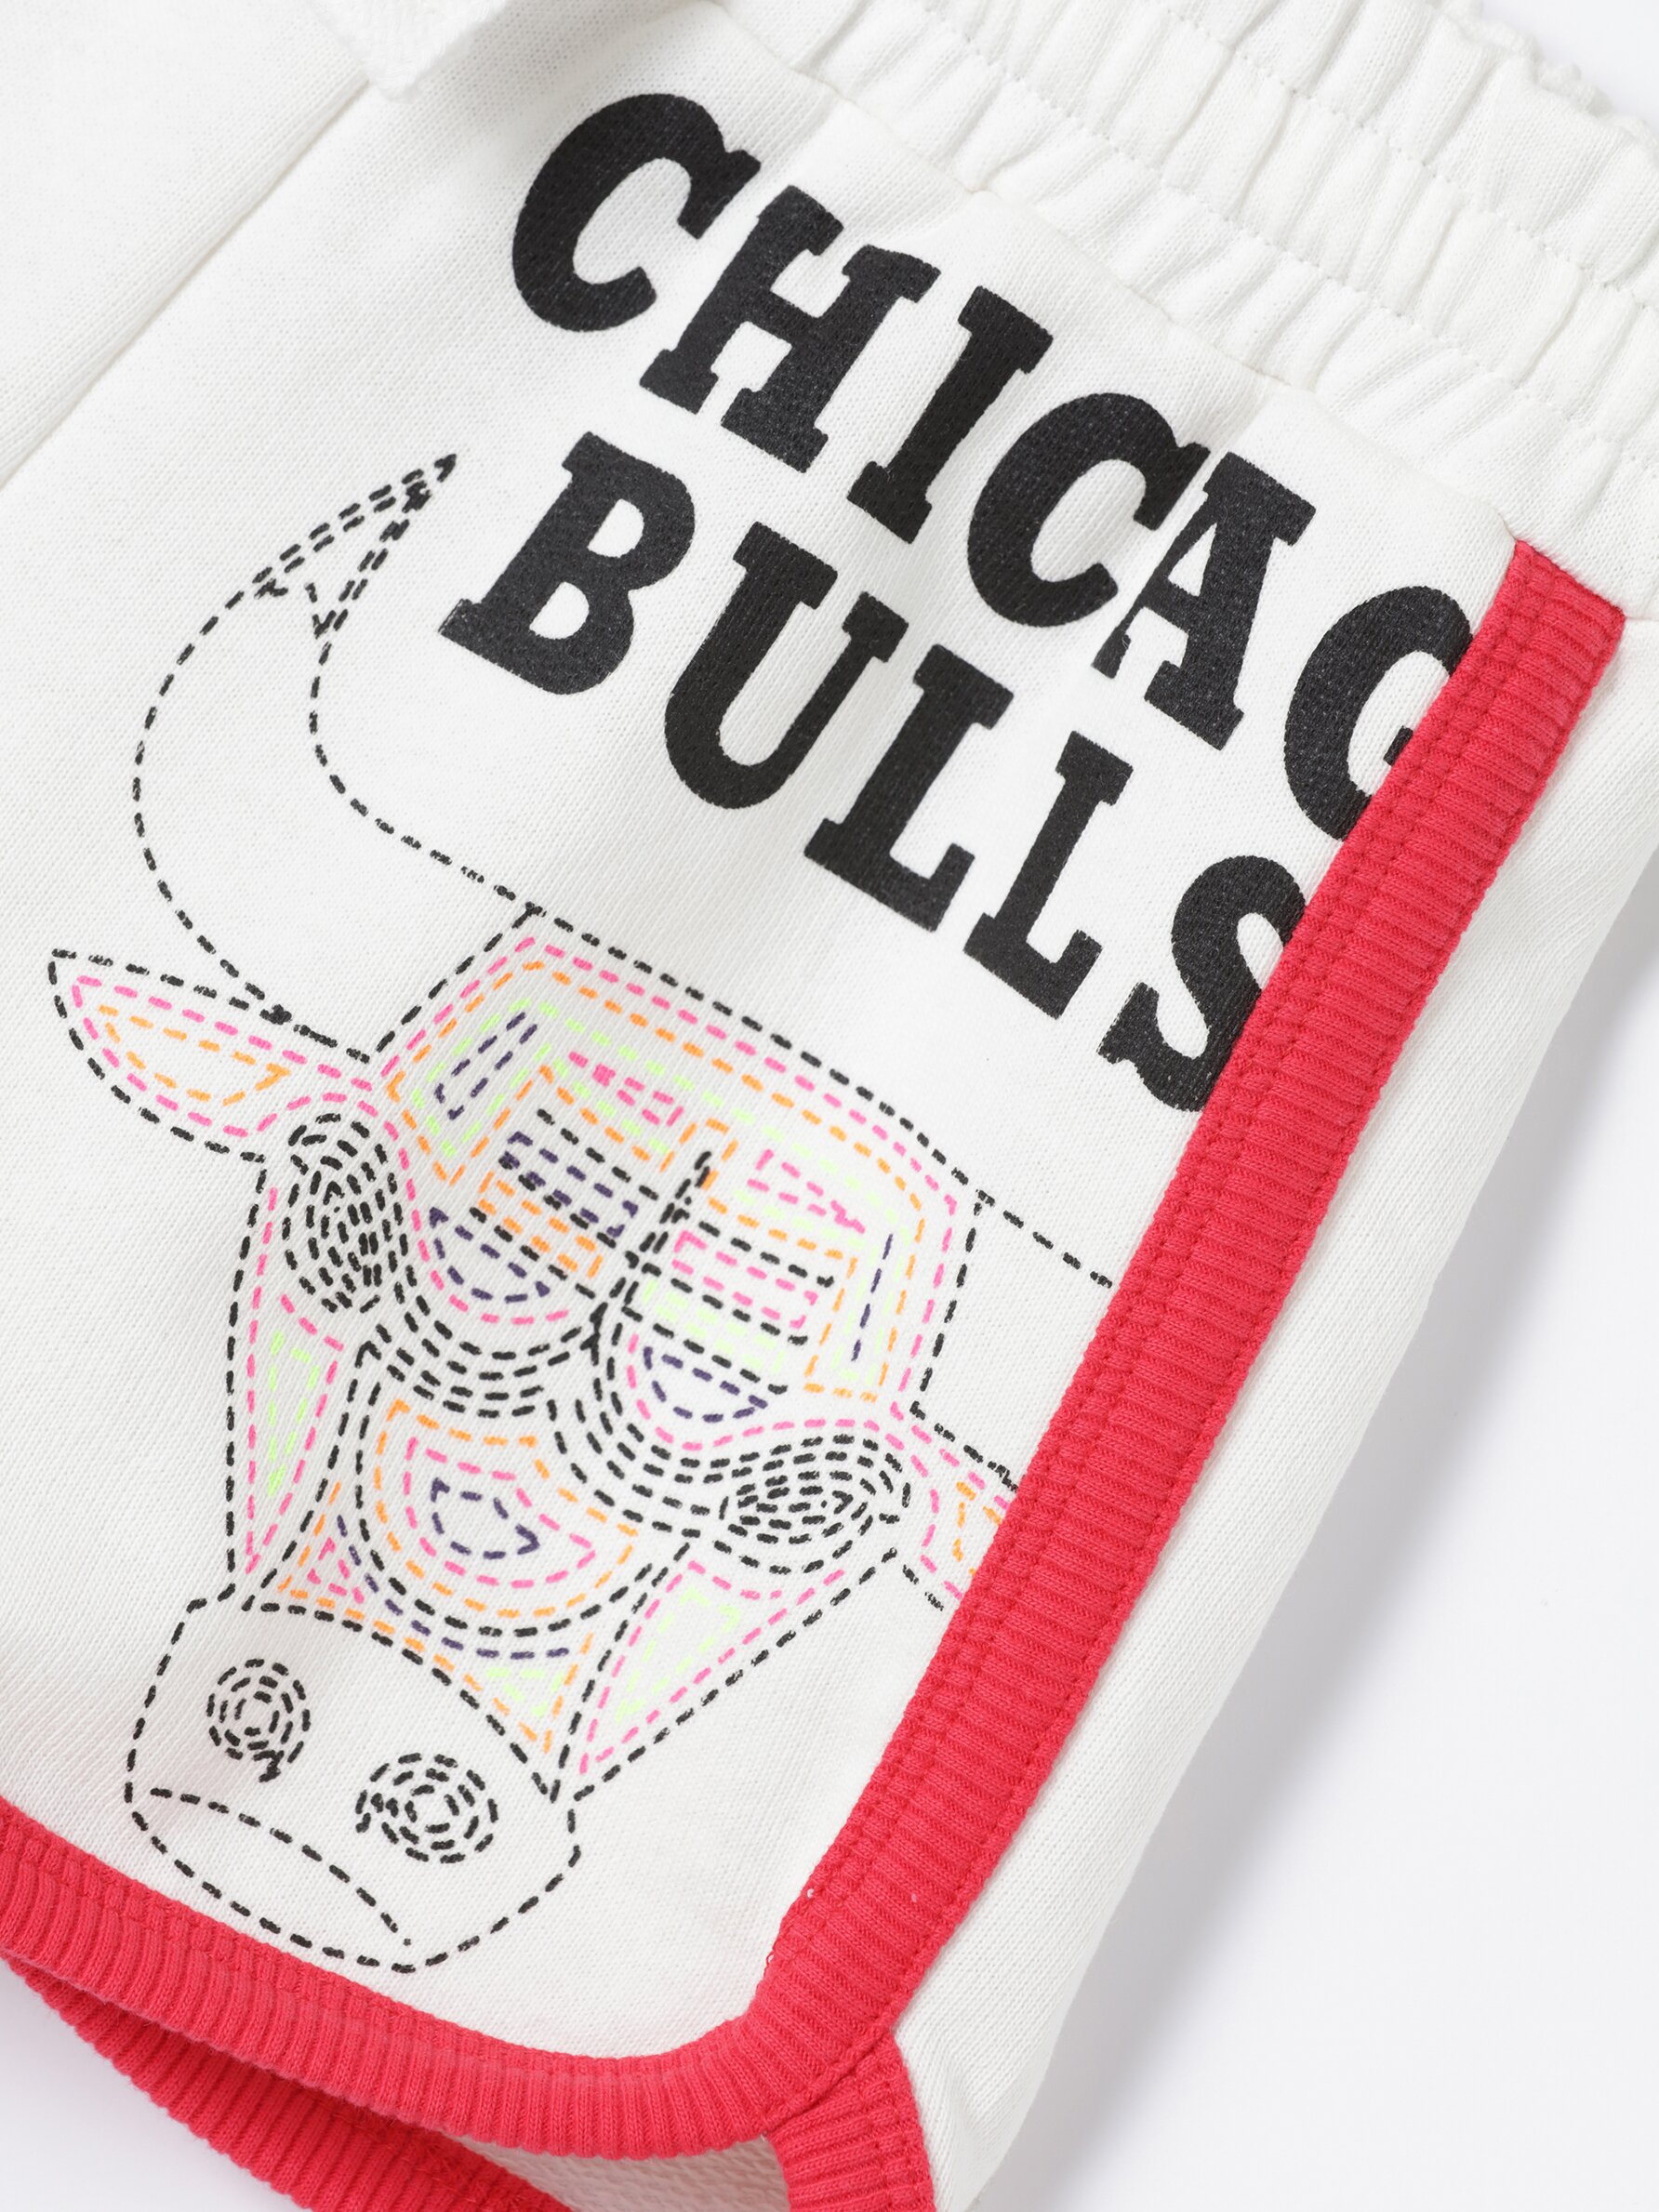 CHICAGO BULLS NBA print shorts - Sportswear - CLOTHING - Girl - Kids 